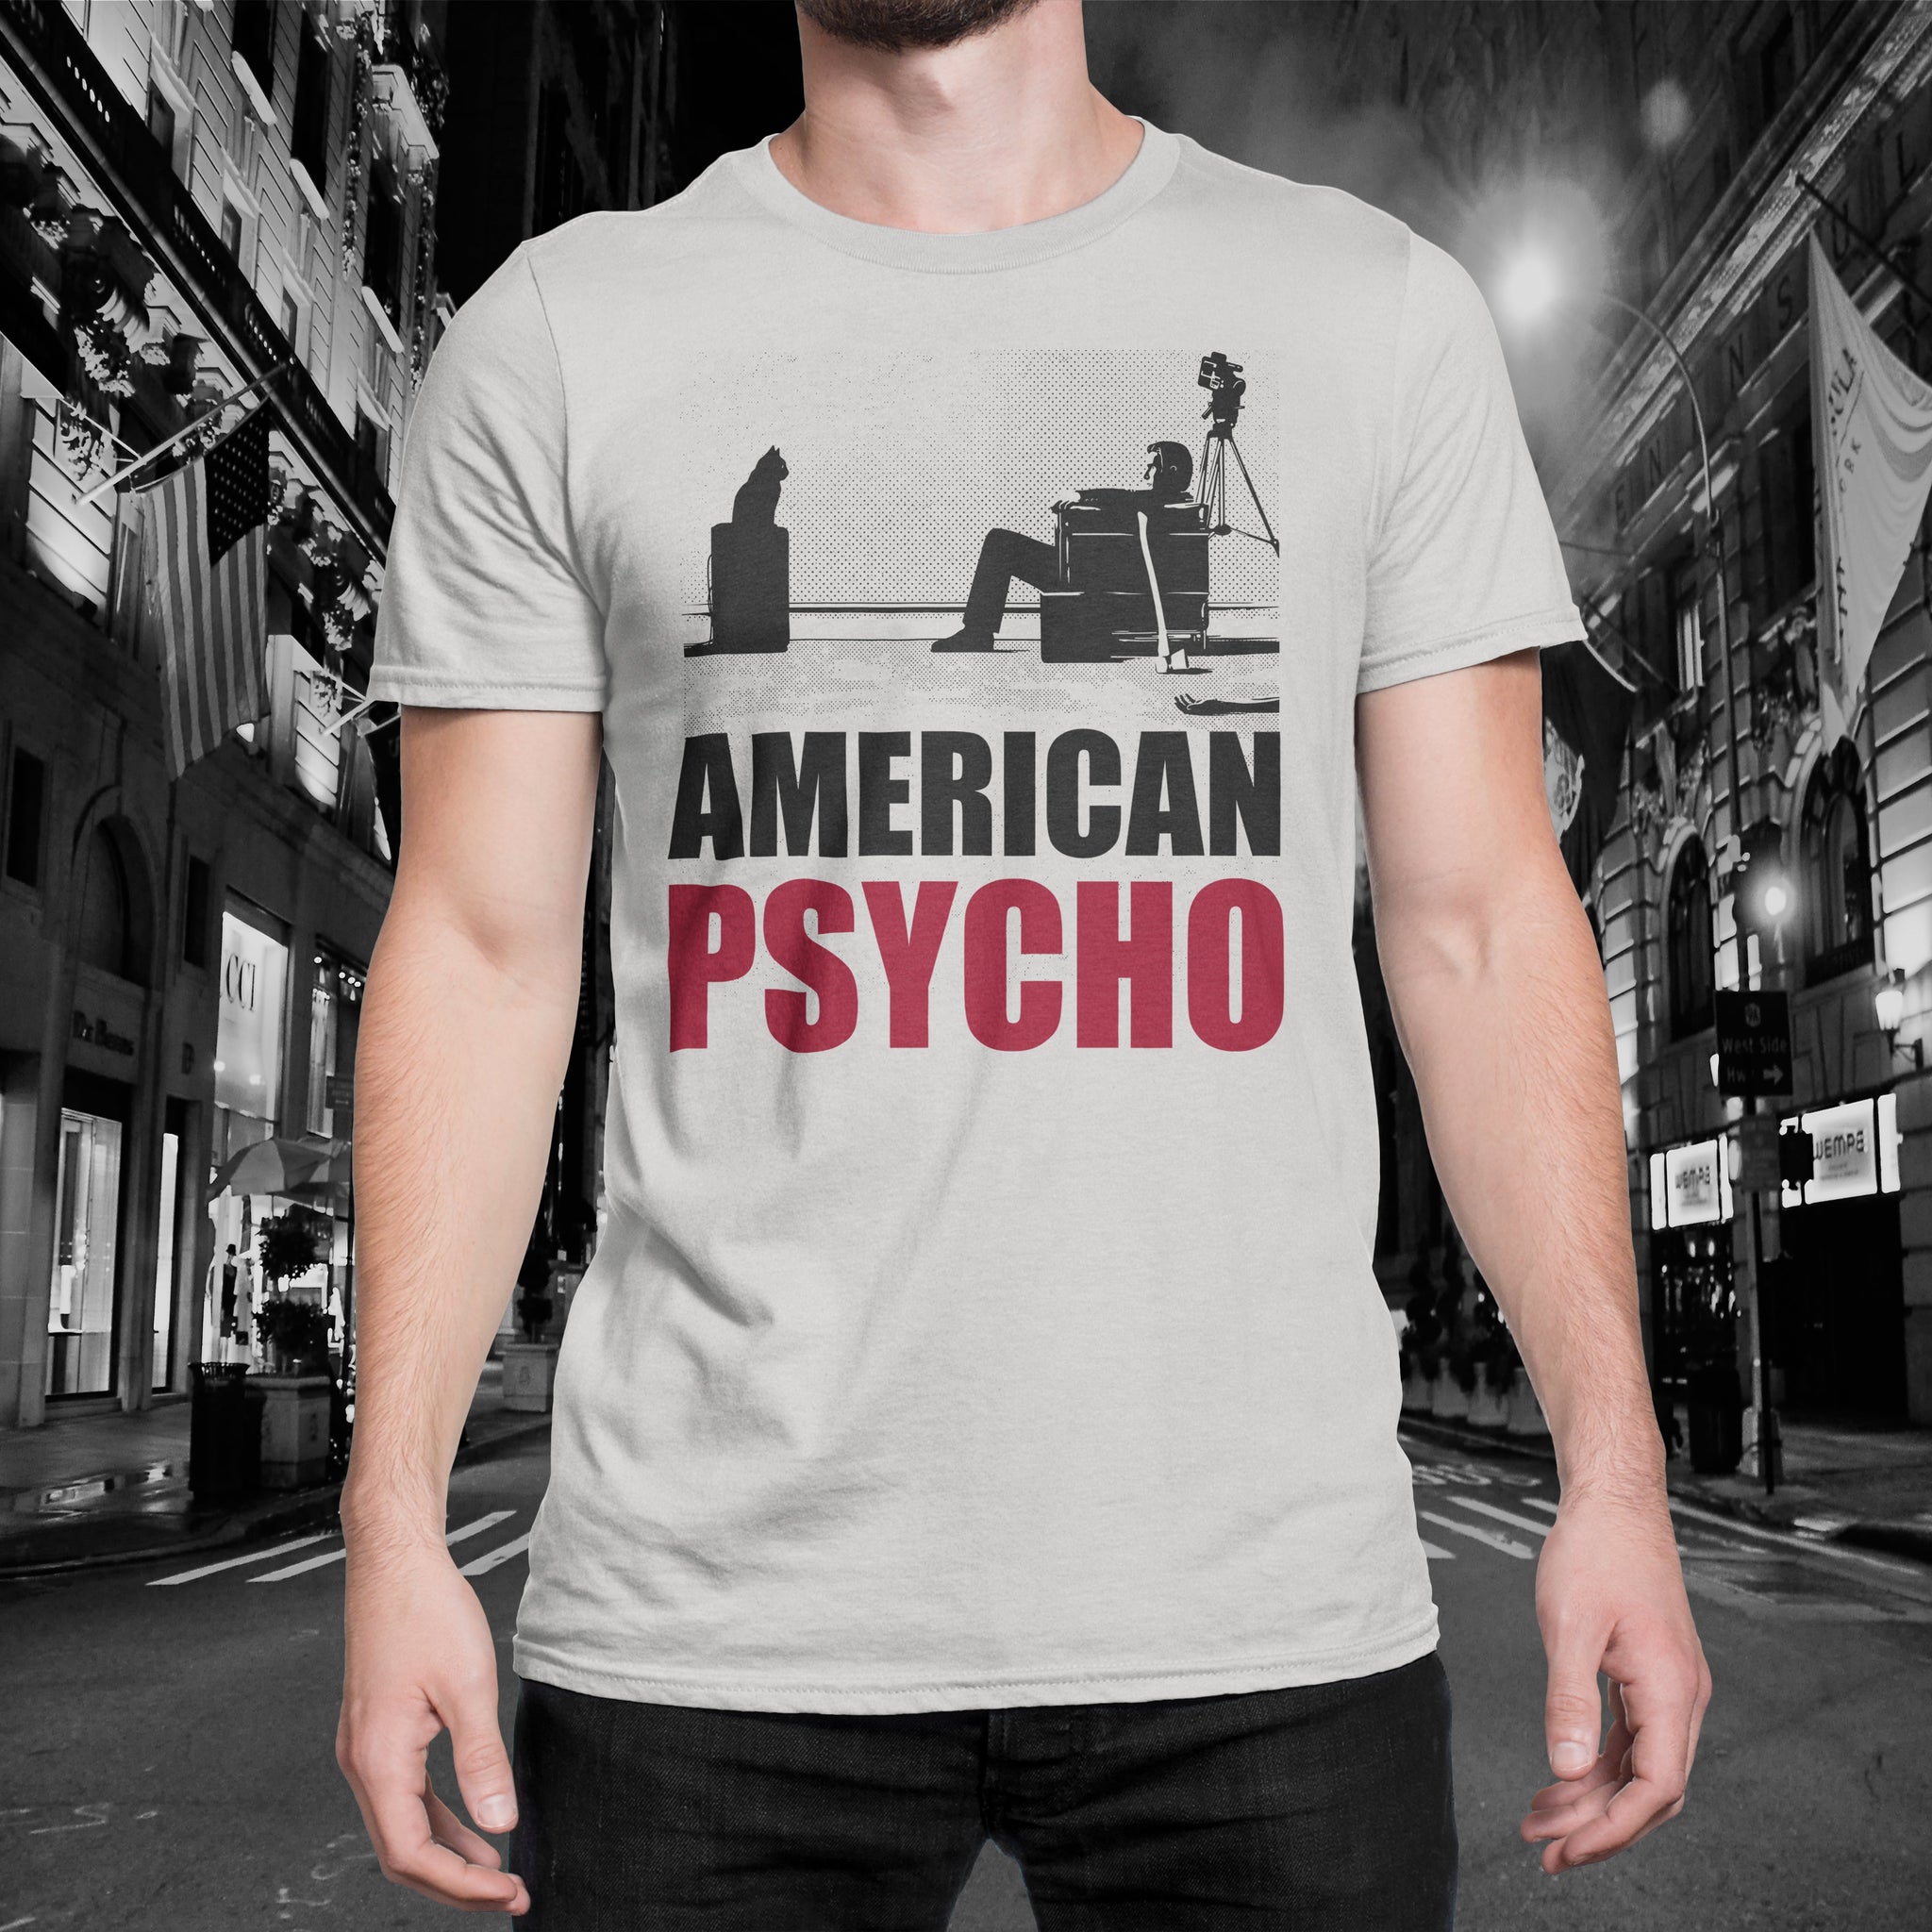 American Psycho "Maxell" Tee